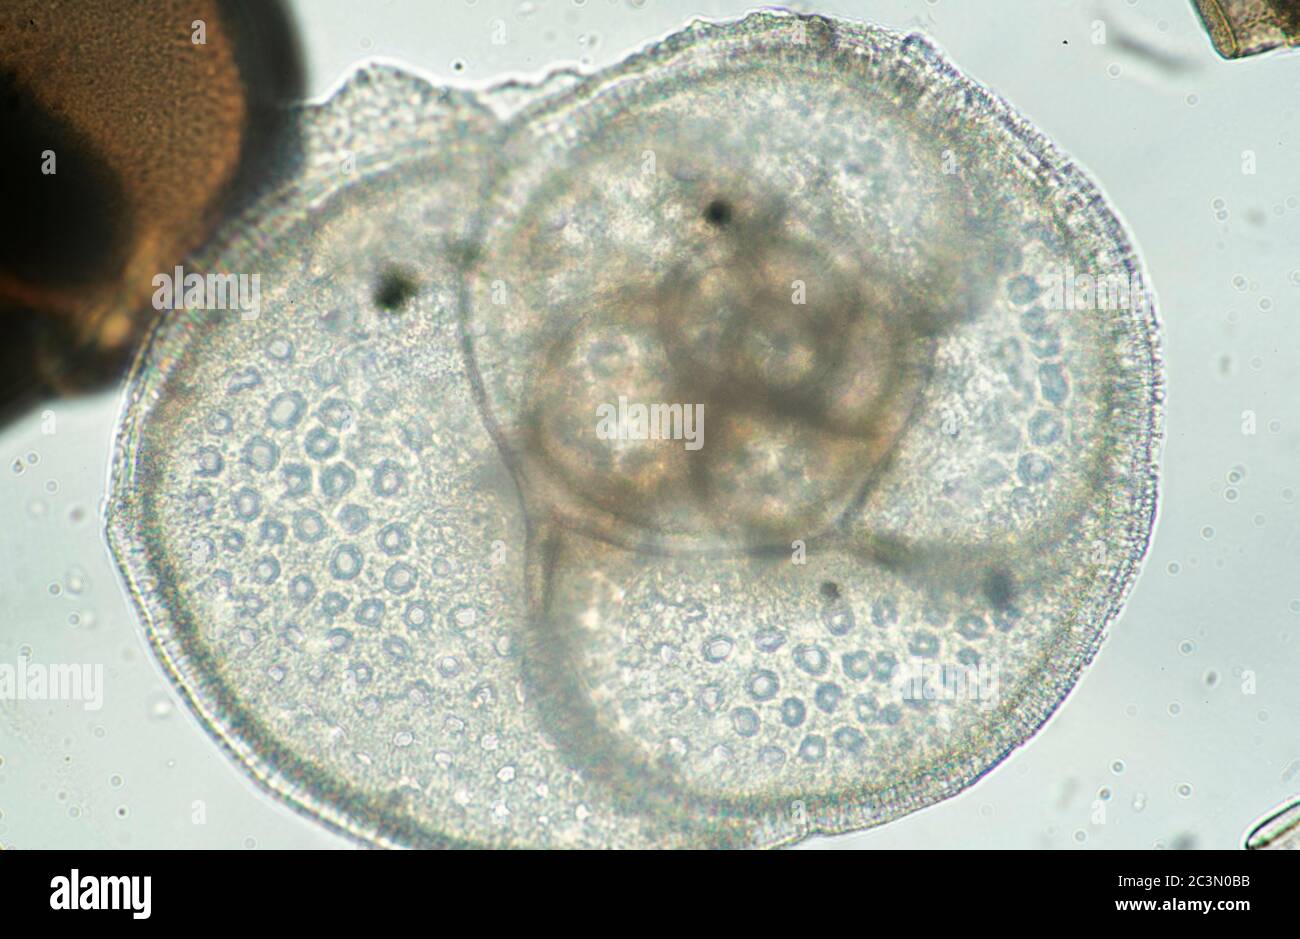 Foraminifera tests, amoeboid protists from Adriatic Sea, microscope view  Stock Photo - Alamy